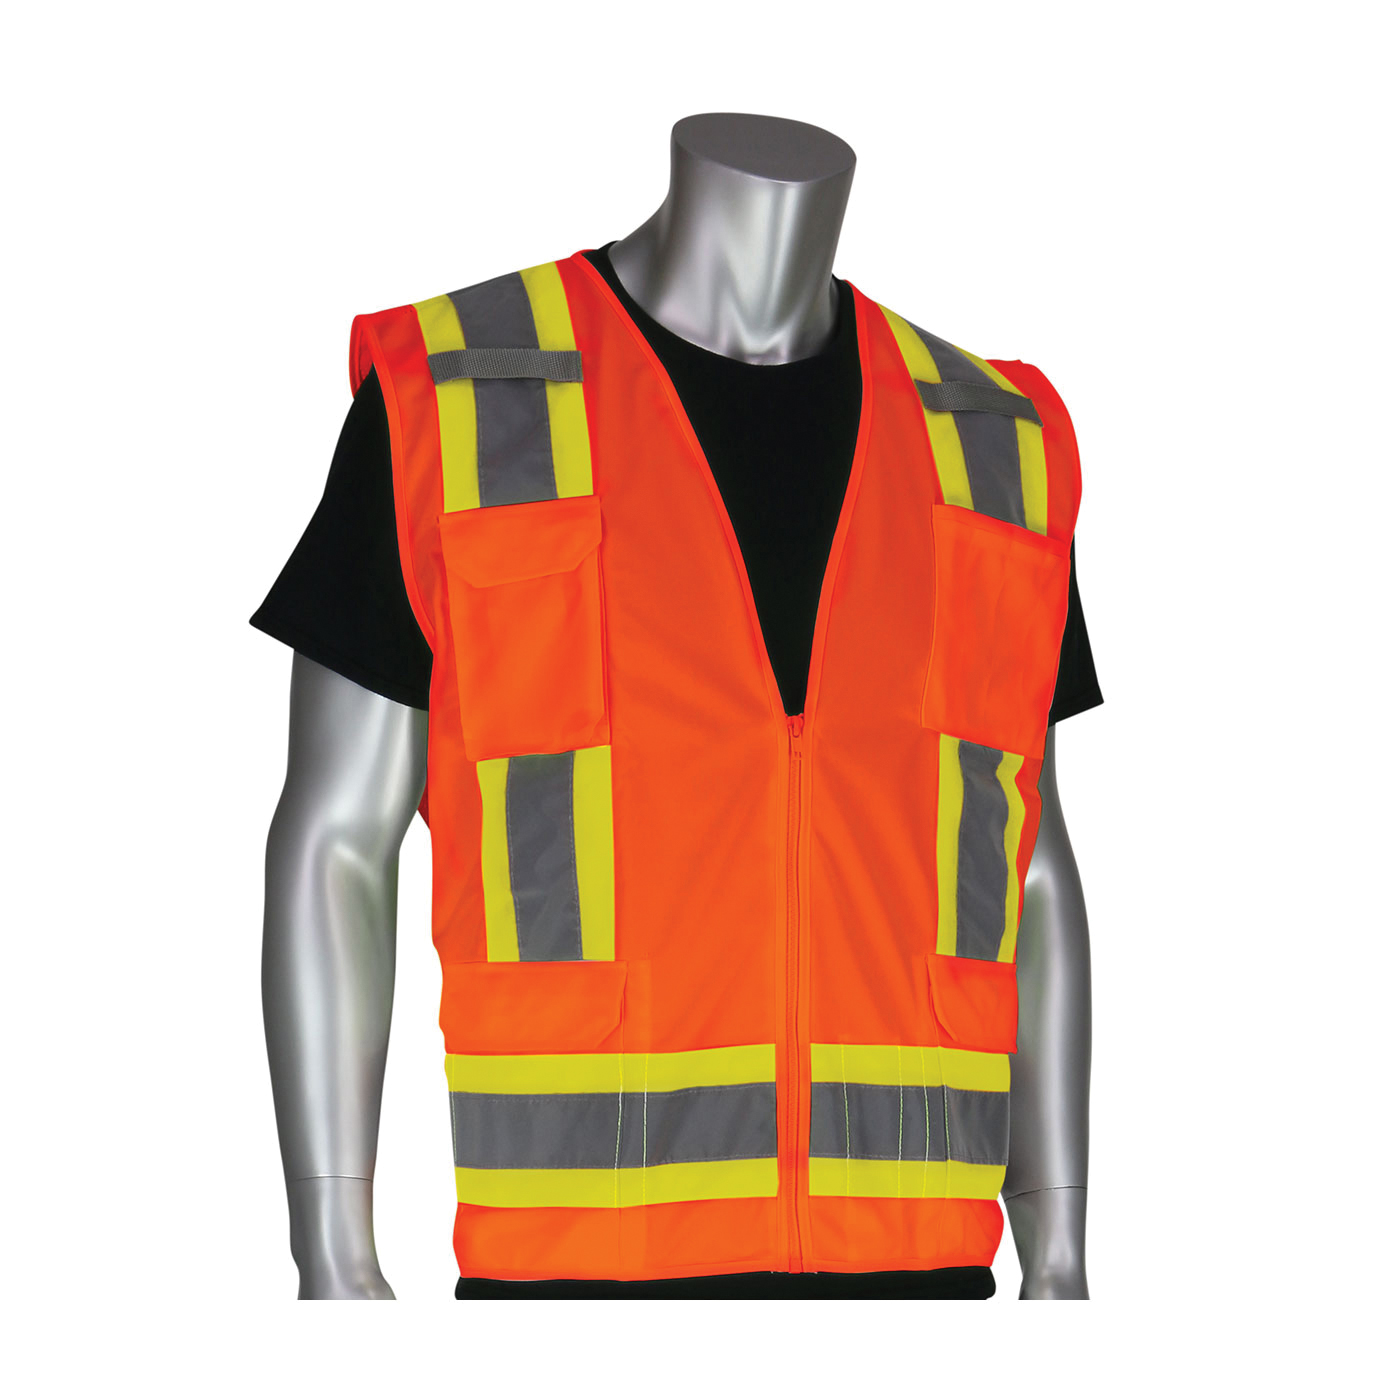 PIP® 302-0500-ORG/M 2-Tone Surveyor Safety Vest, M, Hi-Viz Orange, Polyester/Solid Tricot, Zipper Closure, 11 Pockets, ANSI Class: Class 2, Specifications Met: ANSI 107 Type R